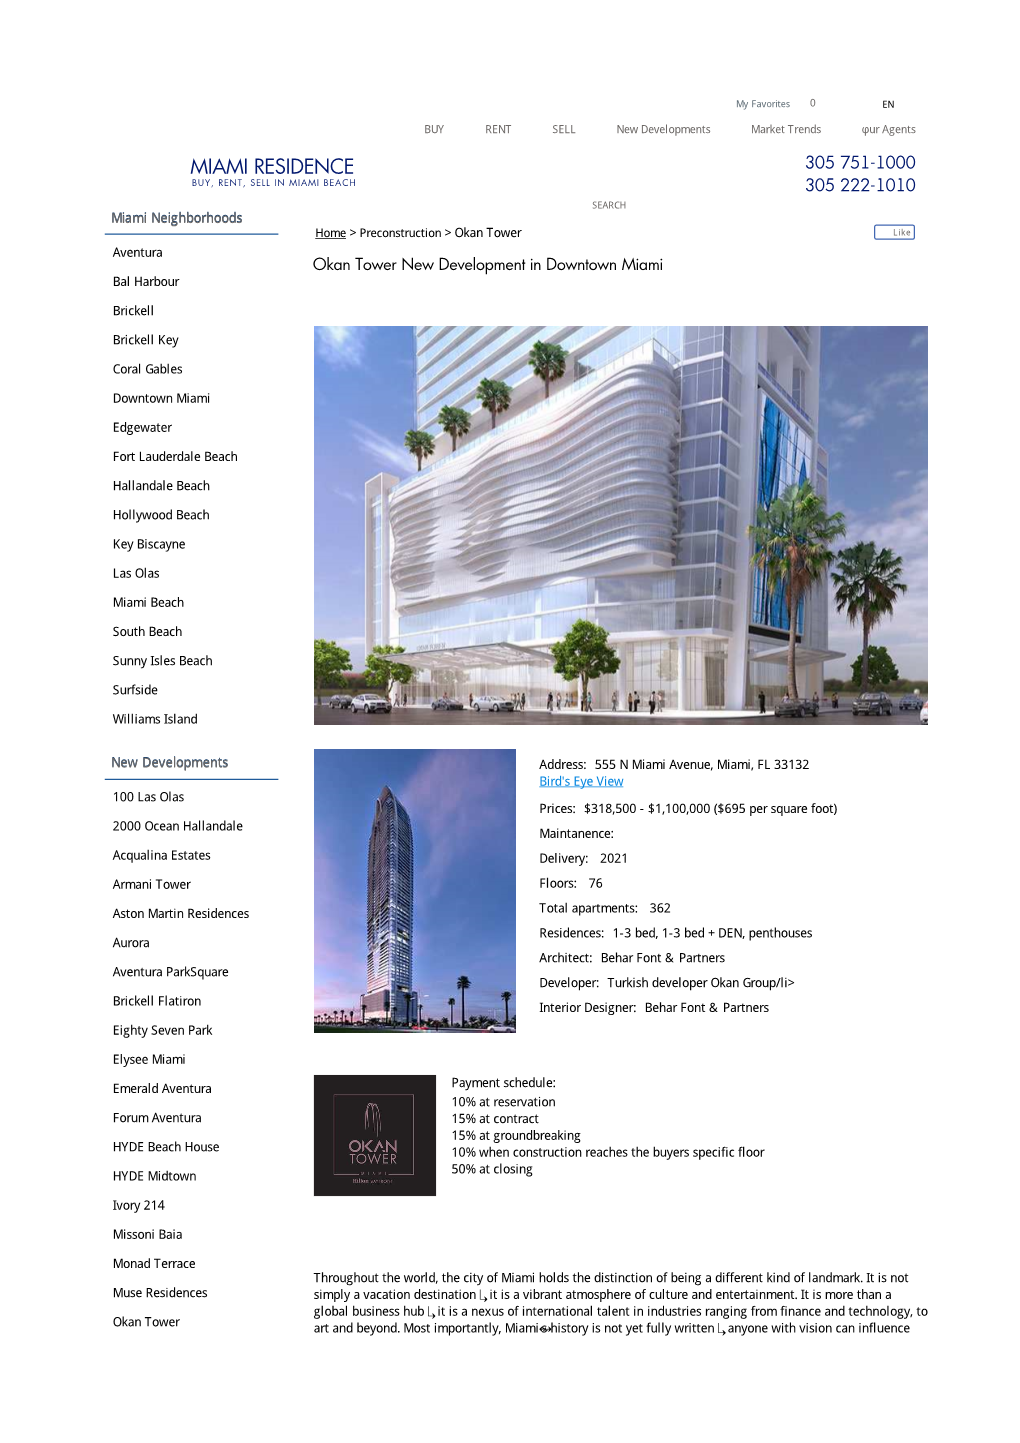 Okan Tower New Development in Downtown Miami